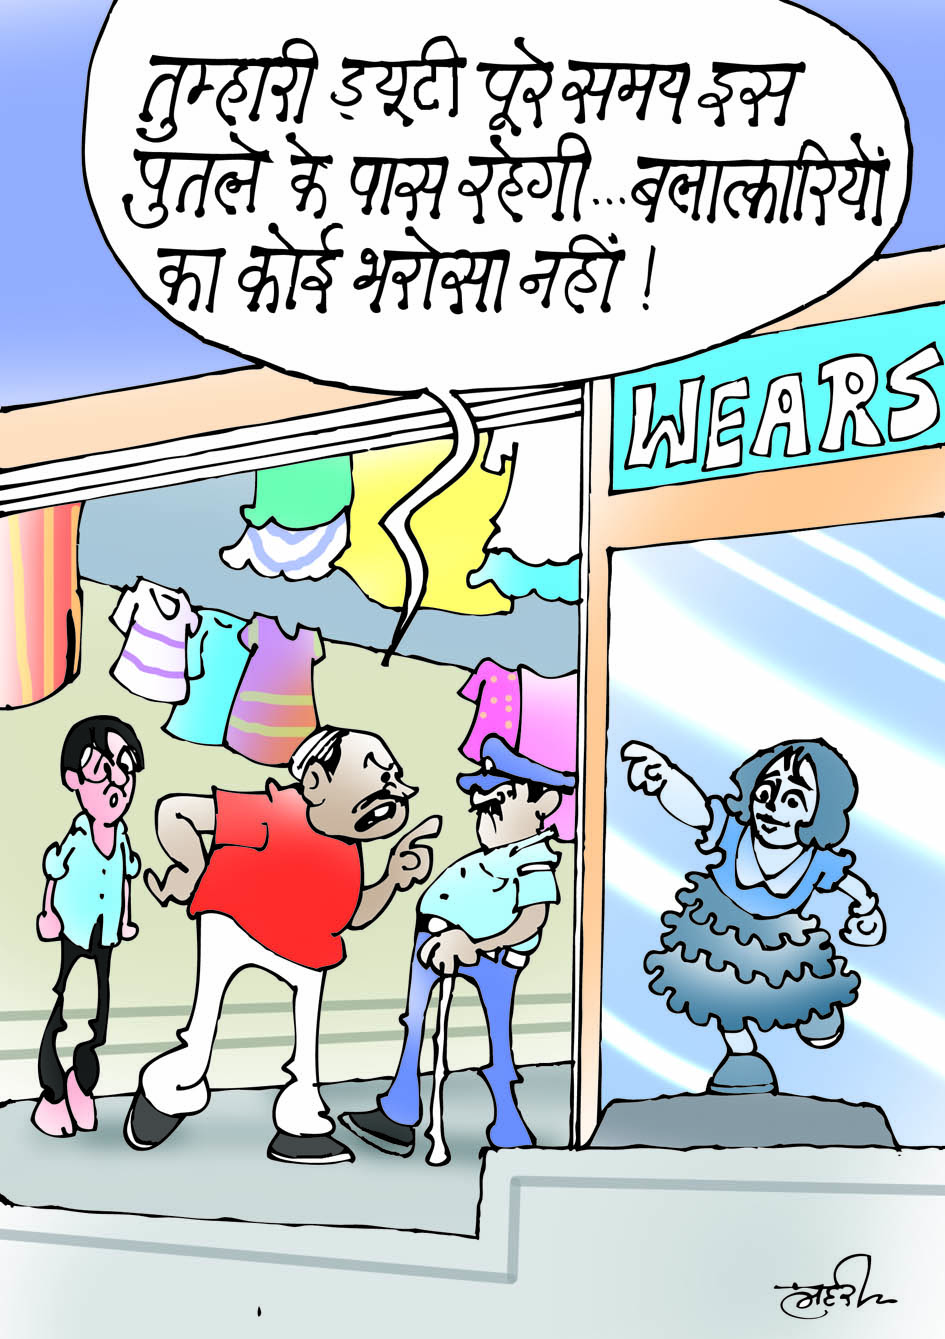 Bam Lahari (Cartoon world)